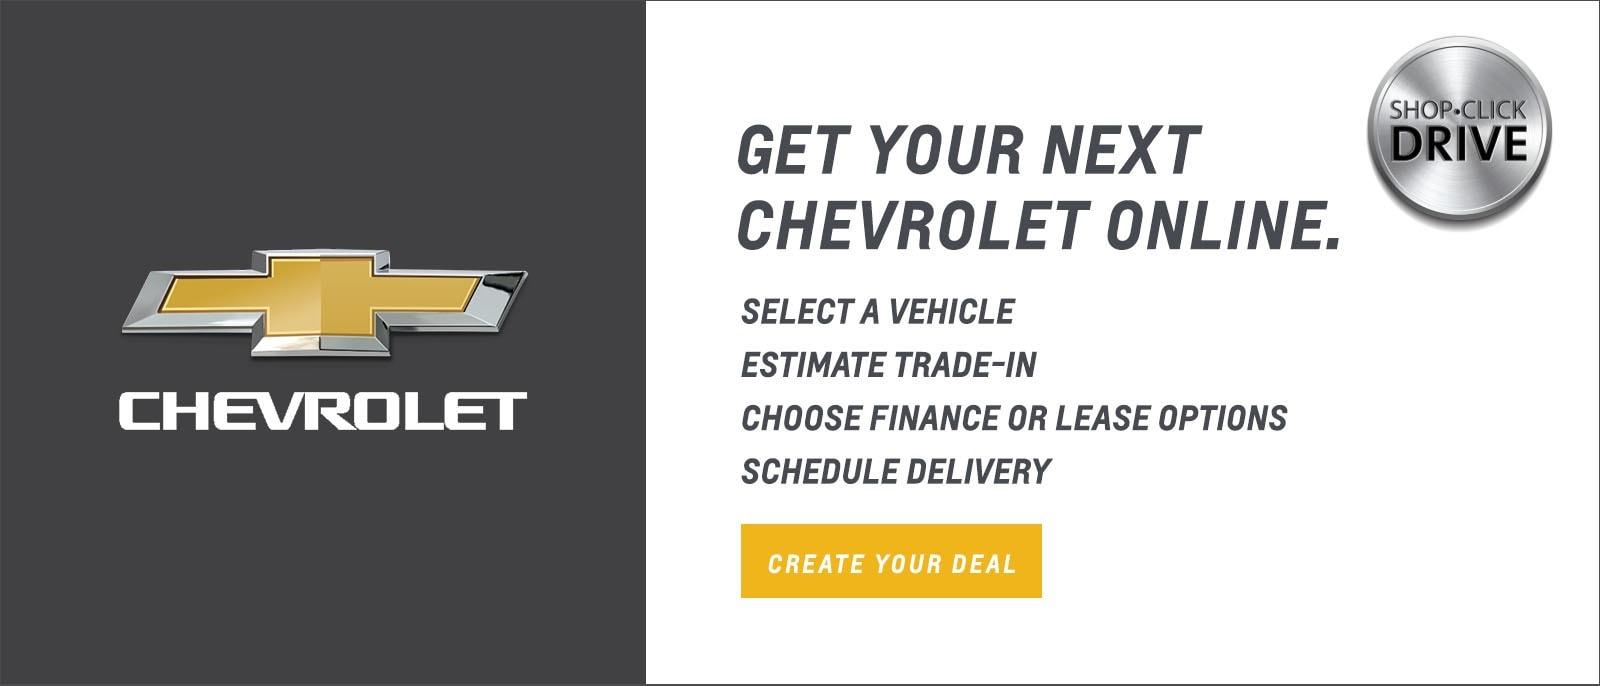 Get your Next Chevrolet online